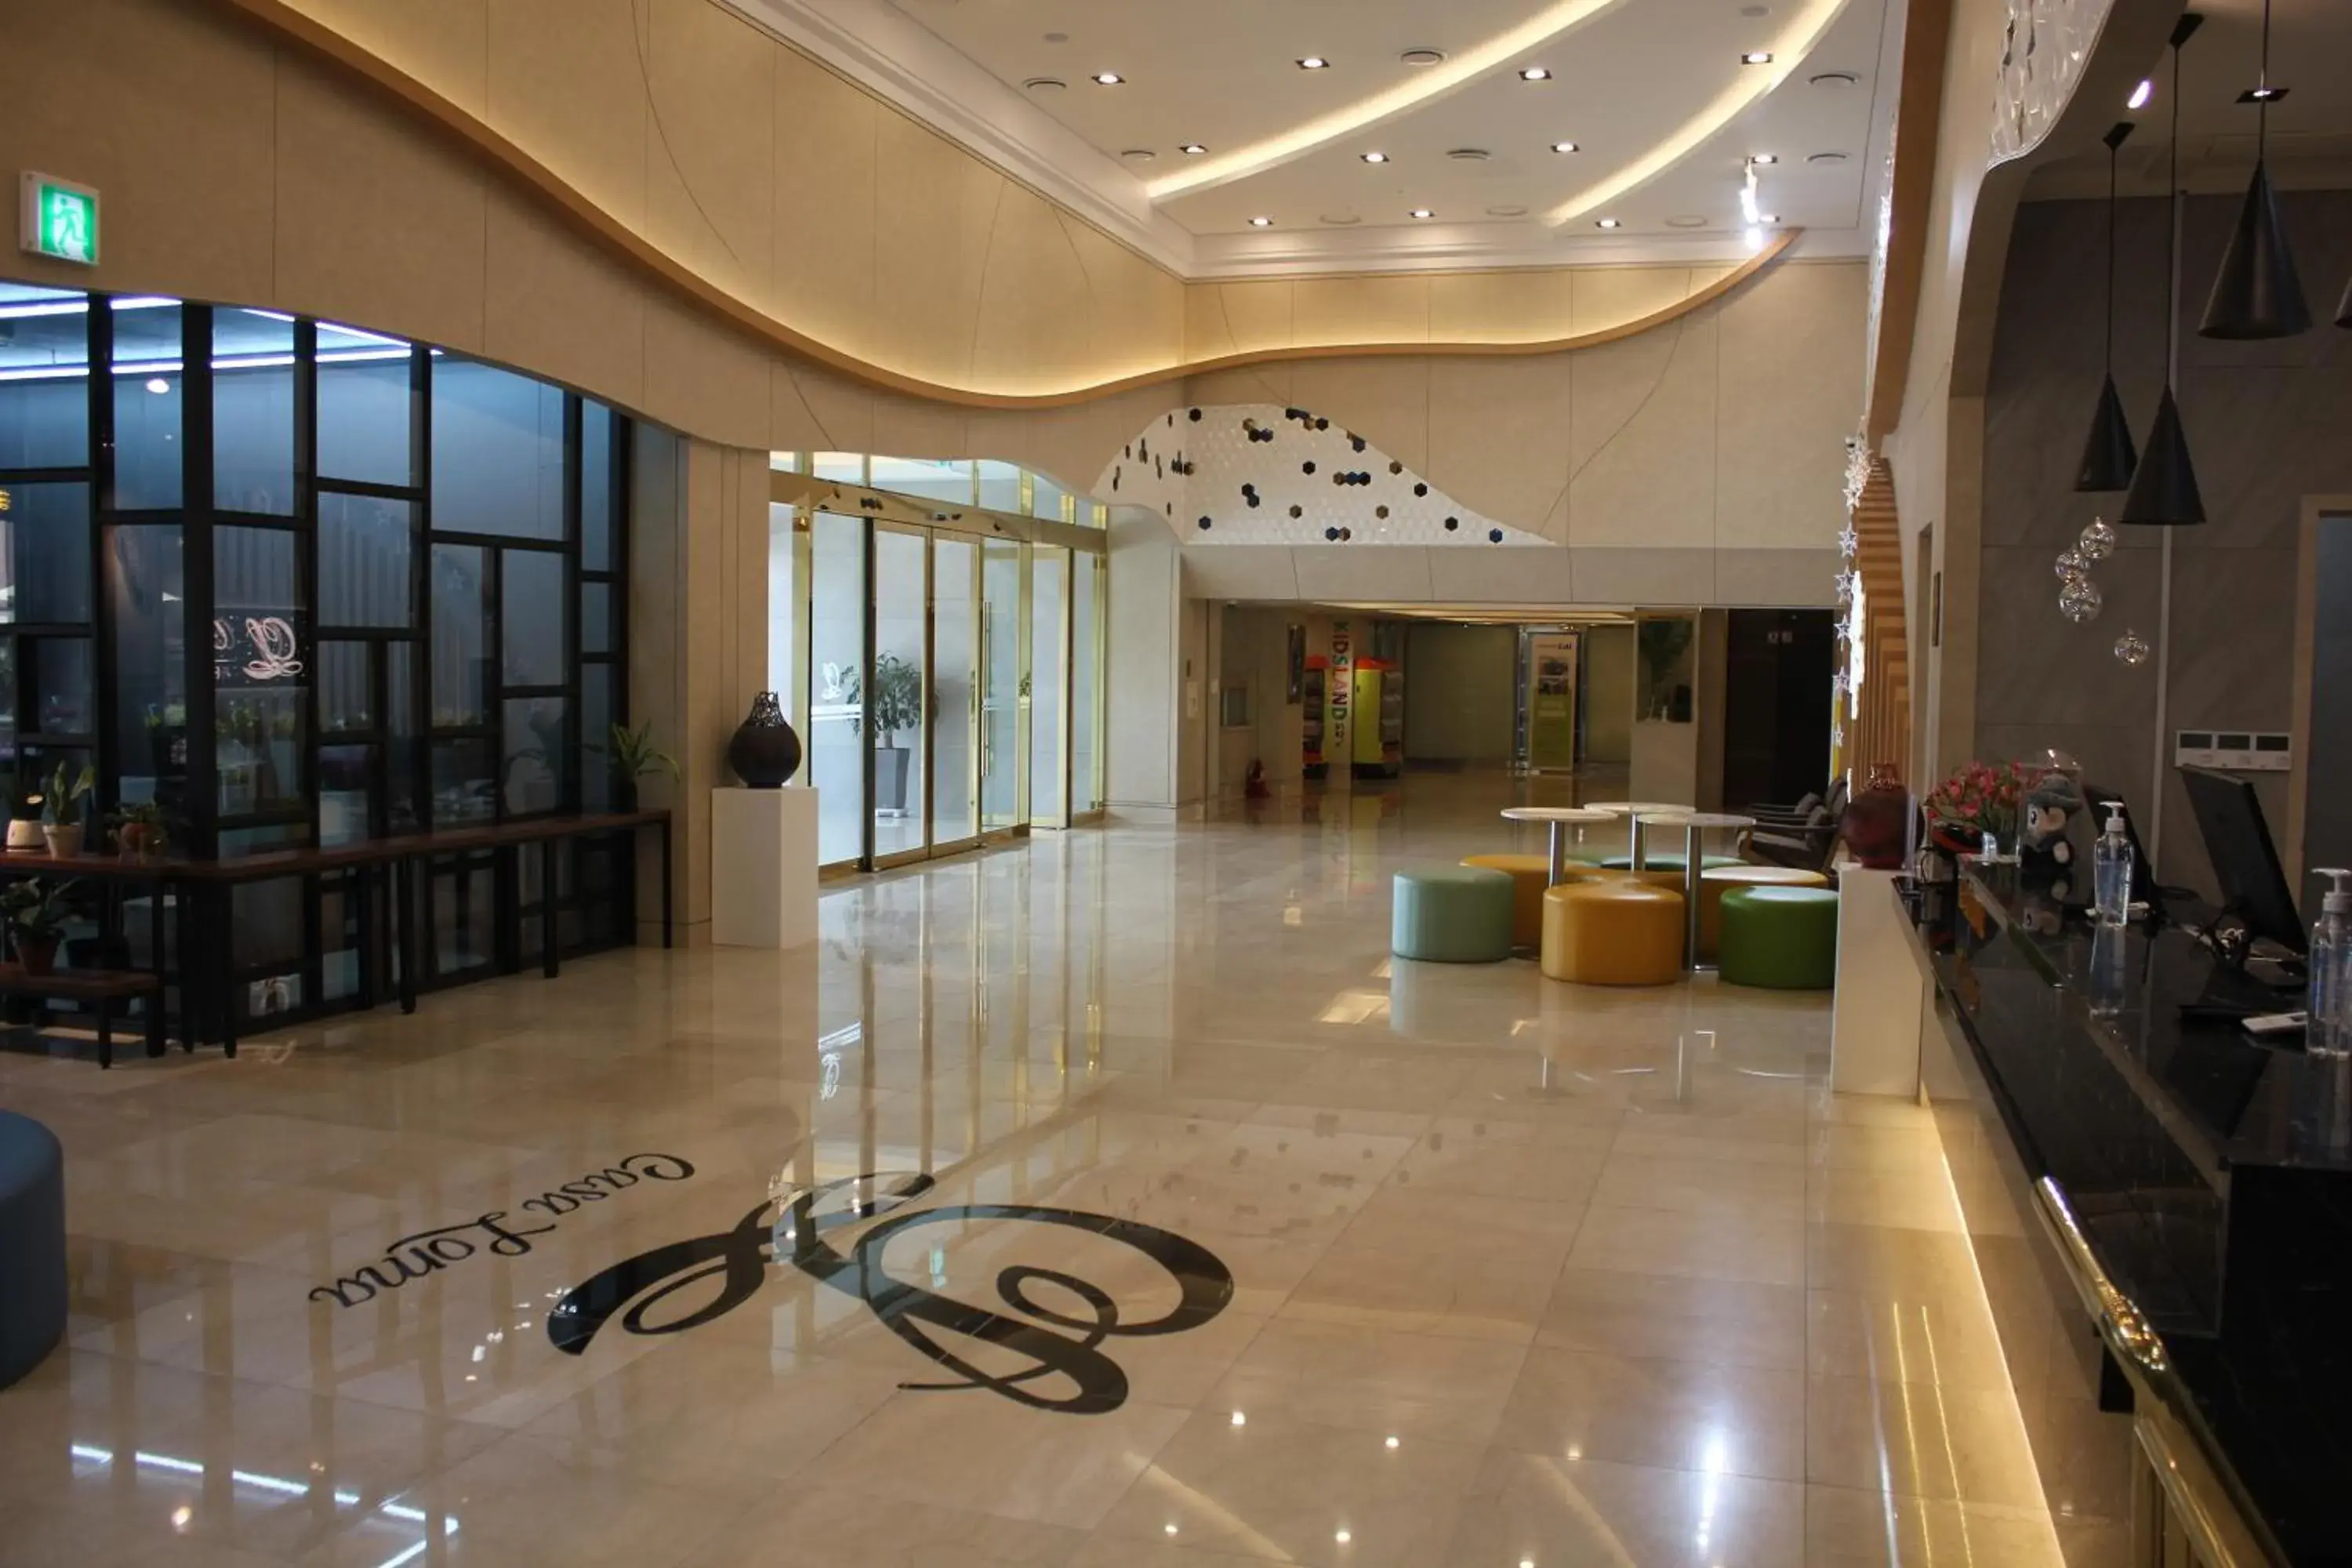 Lobby or reception in Casaloma hotel